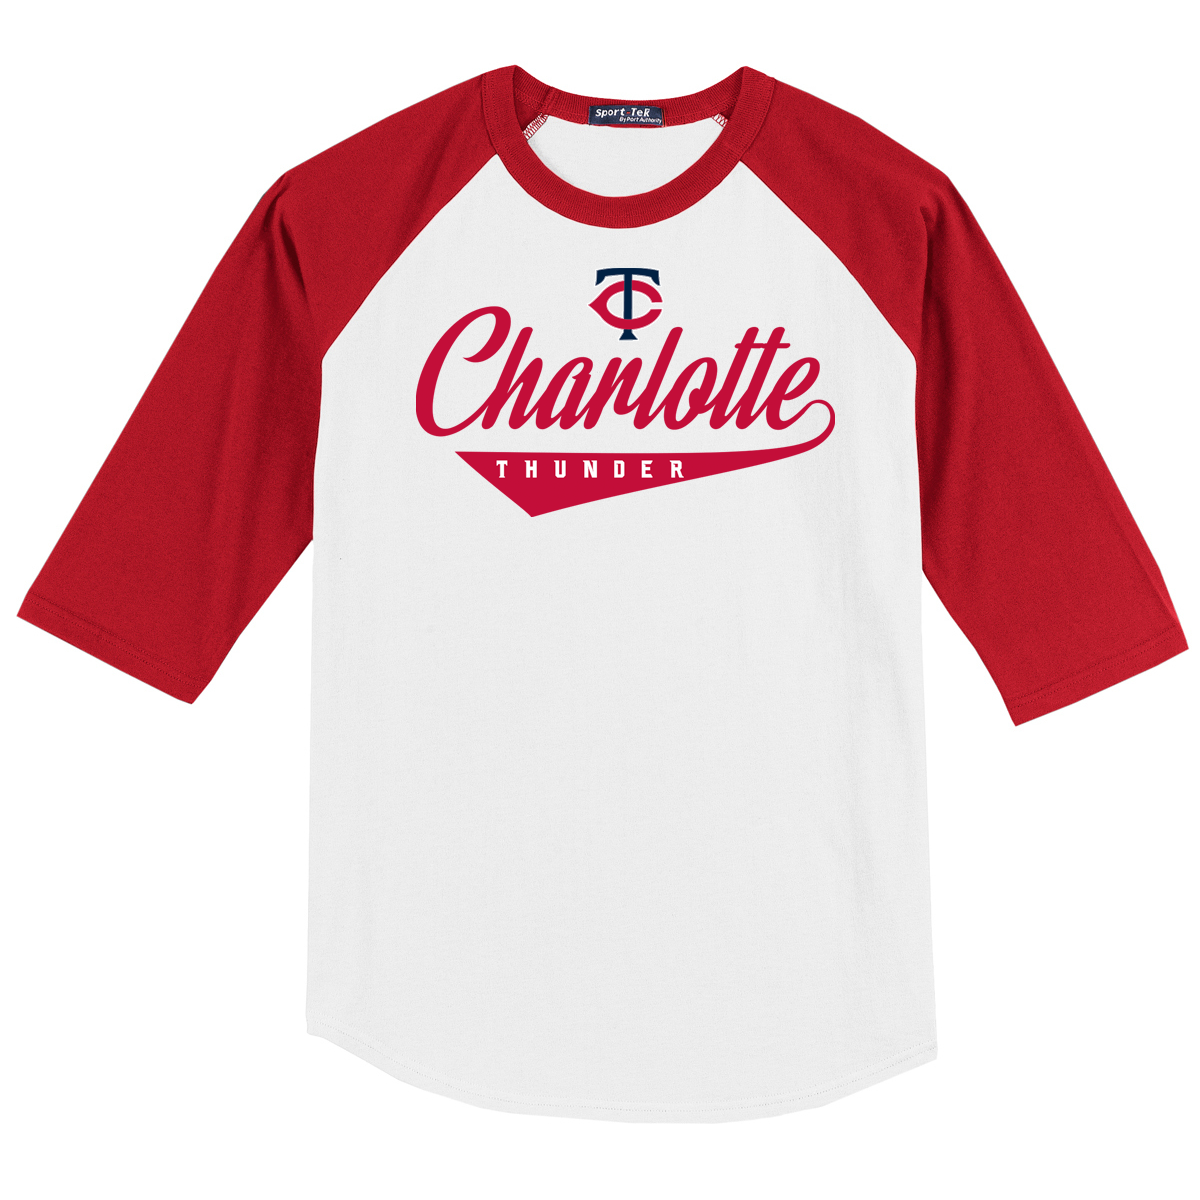 Charlotte Thunder Baseball 3/4 Sleeve Baseball Shirt